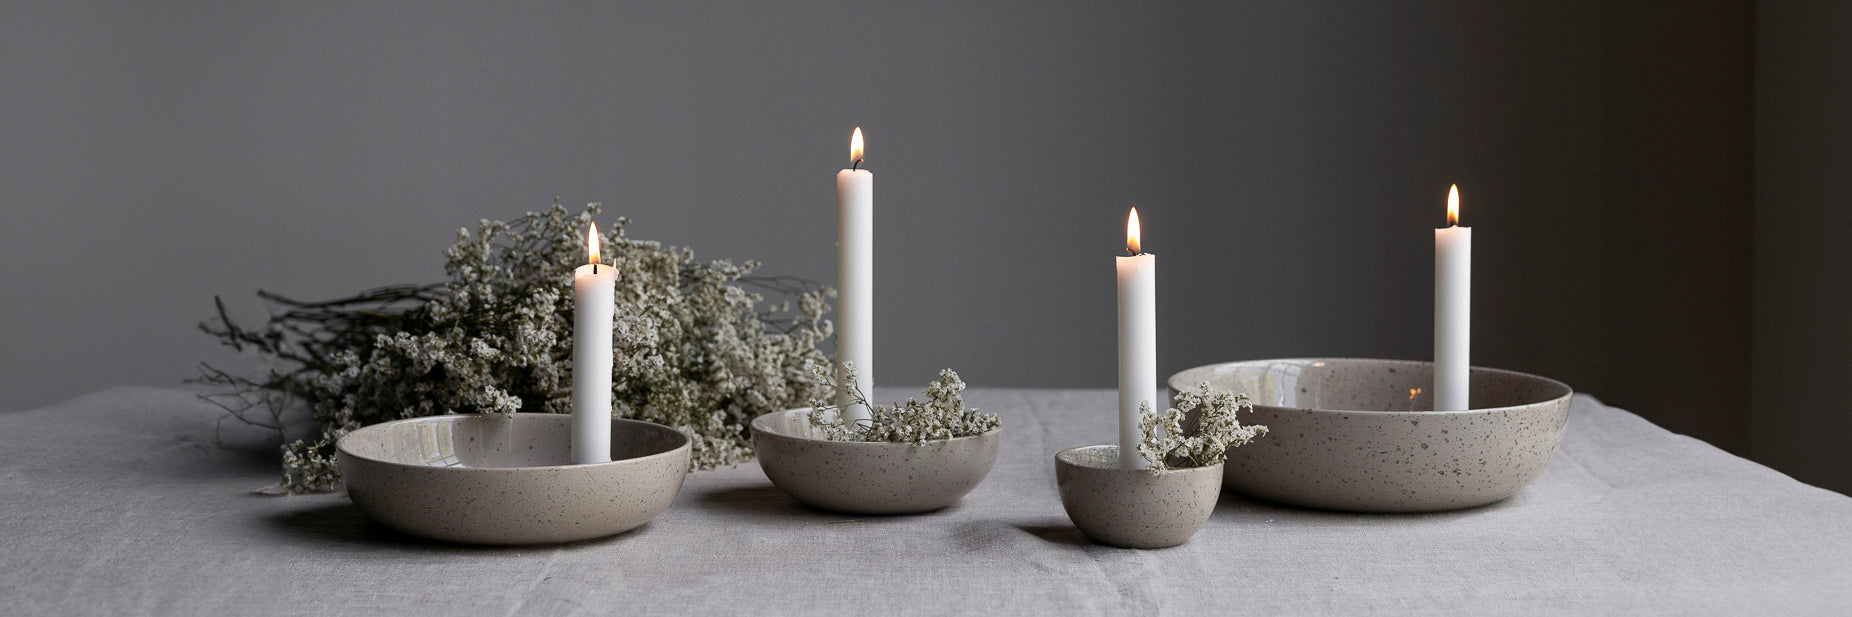 gefertigt Holz Kerzenhalter aus Stil Keramik im / skandinavischen